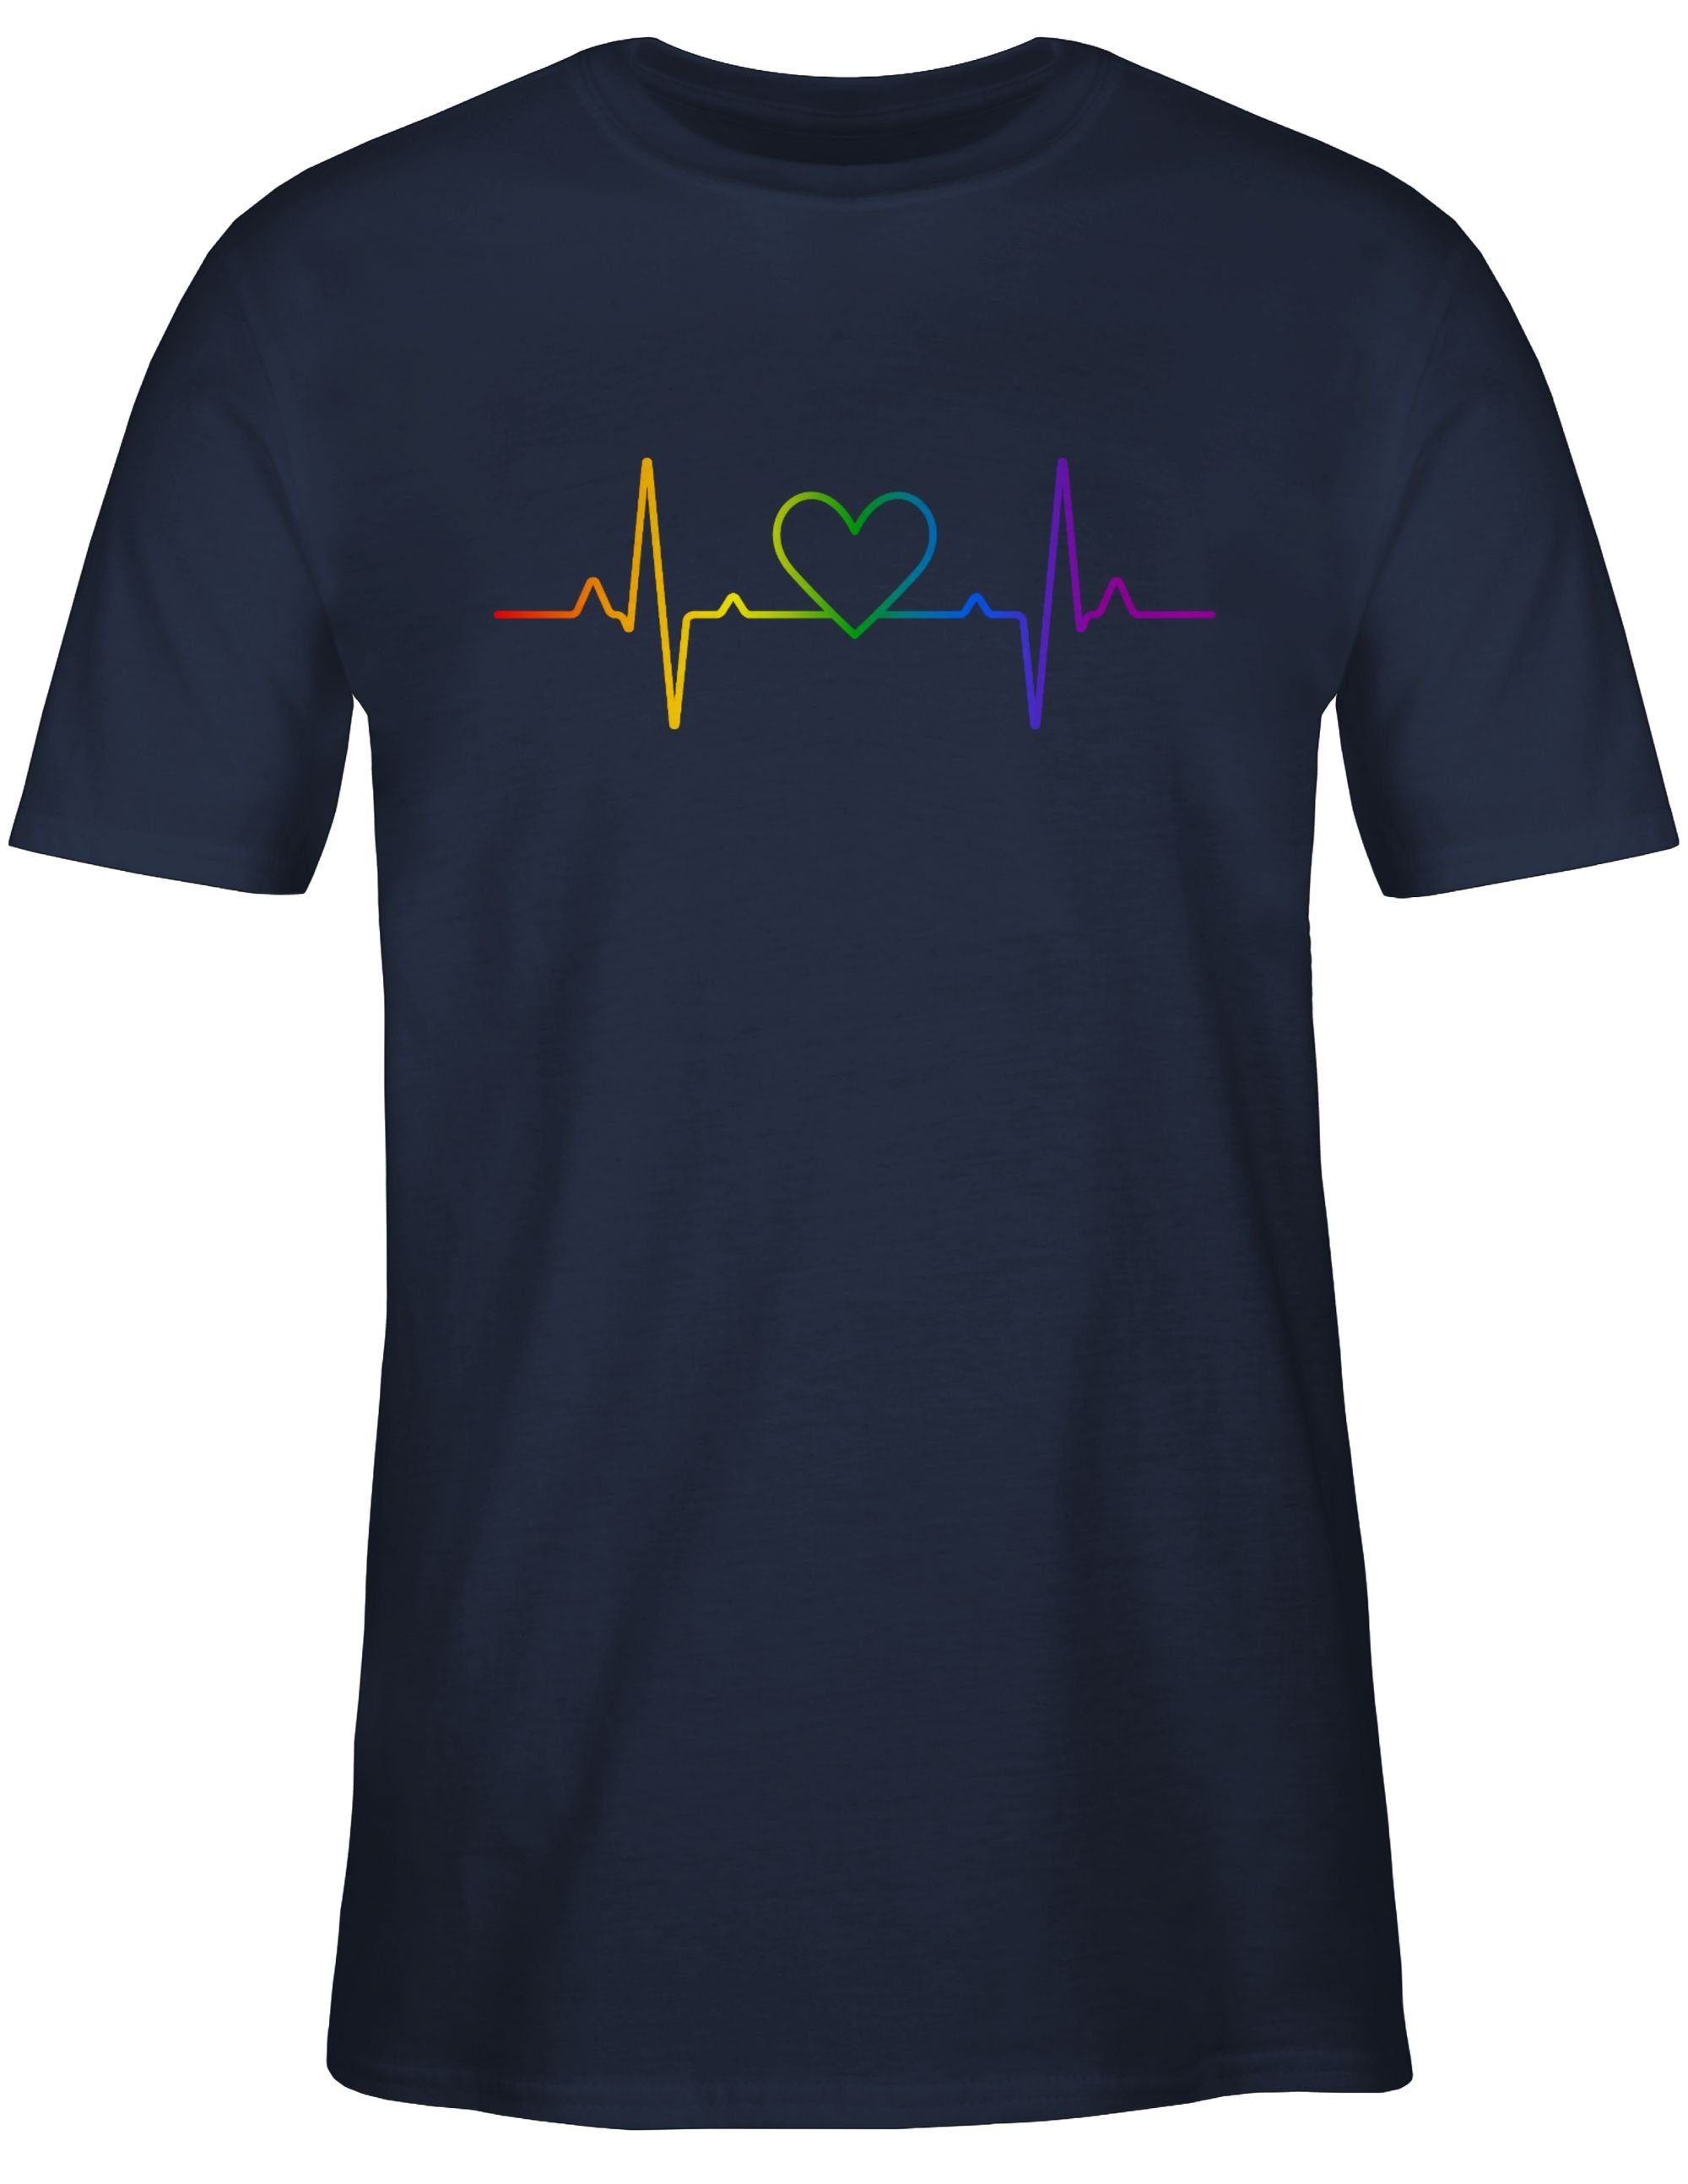 Navy 03 T-Shirt Regenbogen Shirtracer Herzschlag LGBT Pride Kleidung Blau